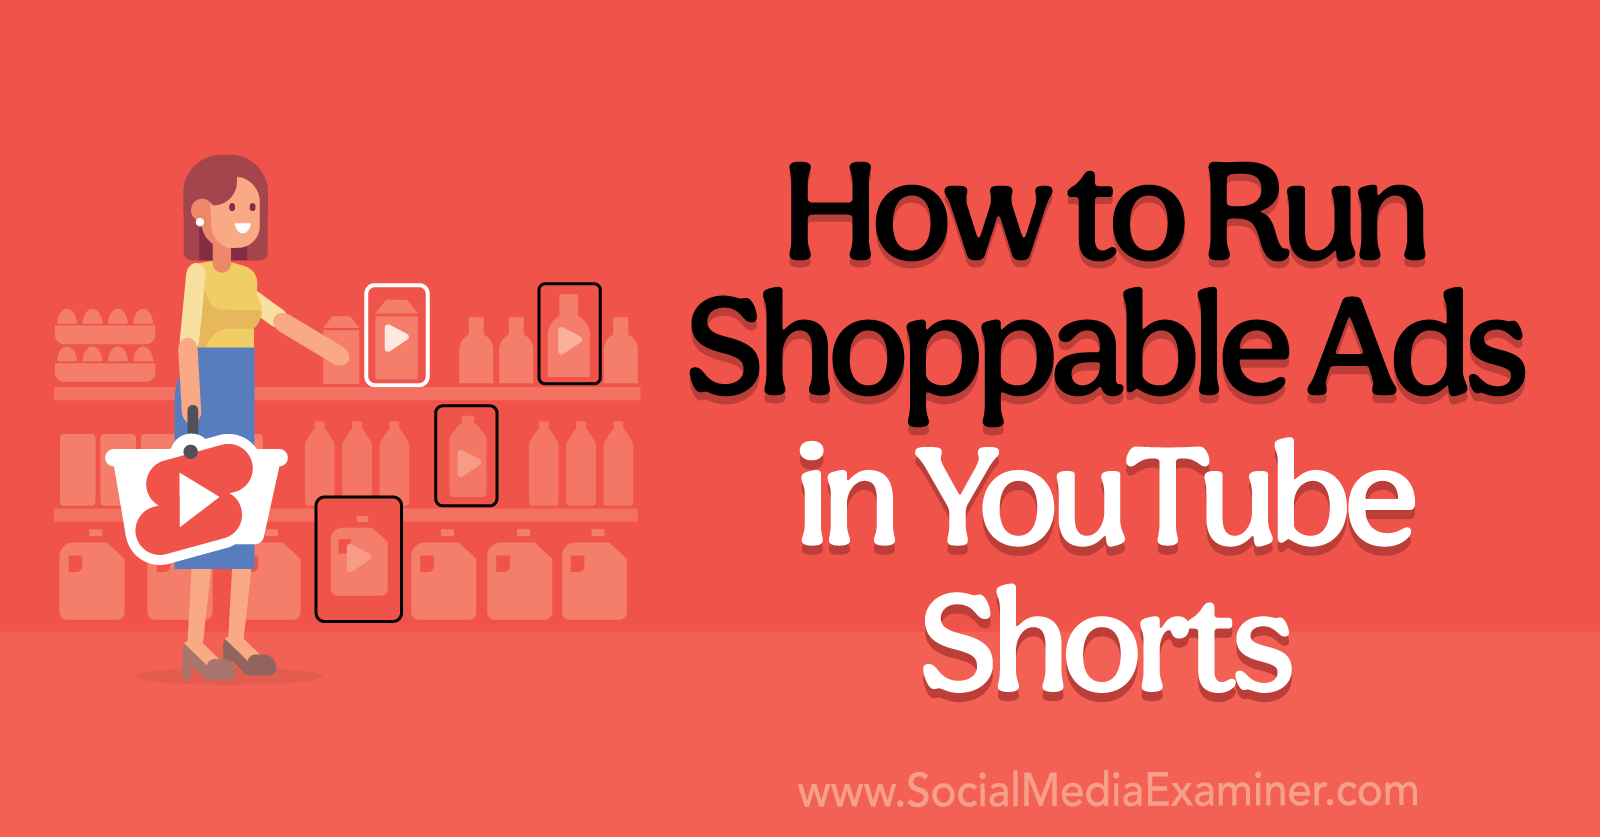 How to Run Shoppable Ads in YouTube Shorts Social Media Examiner